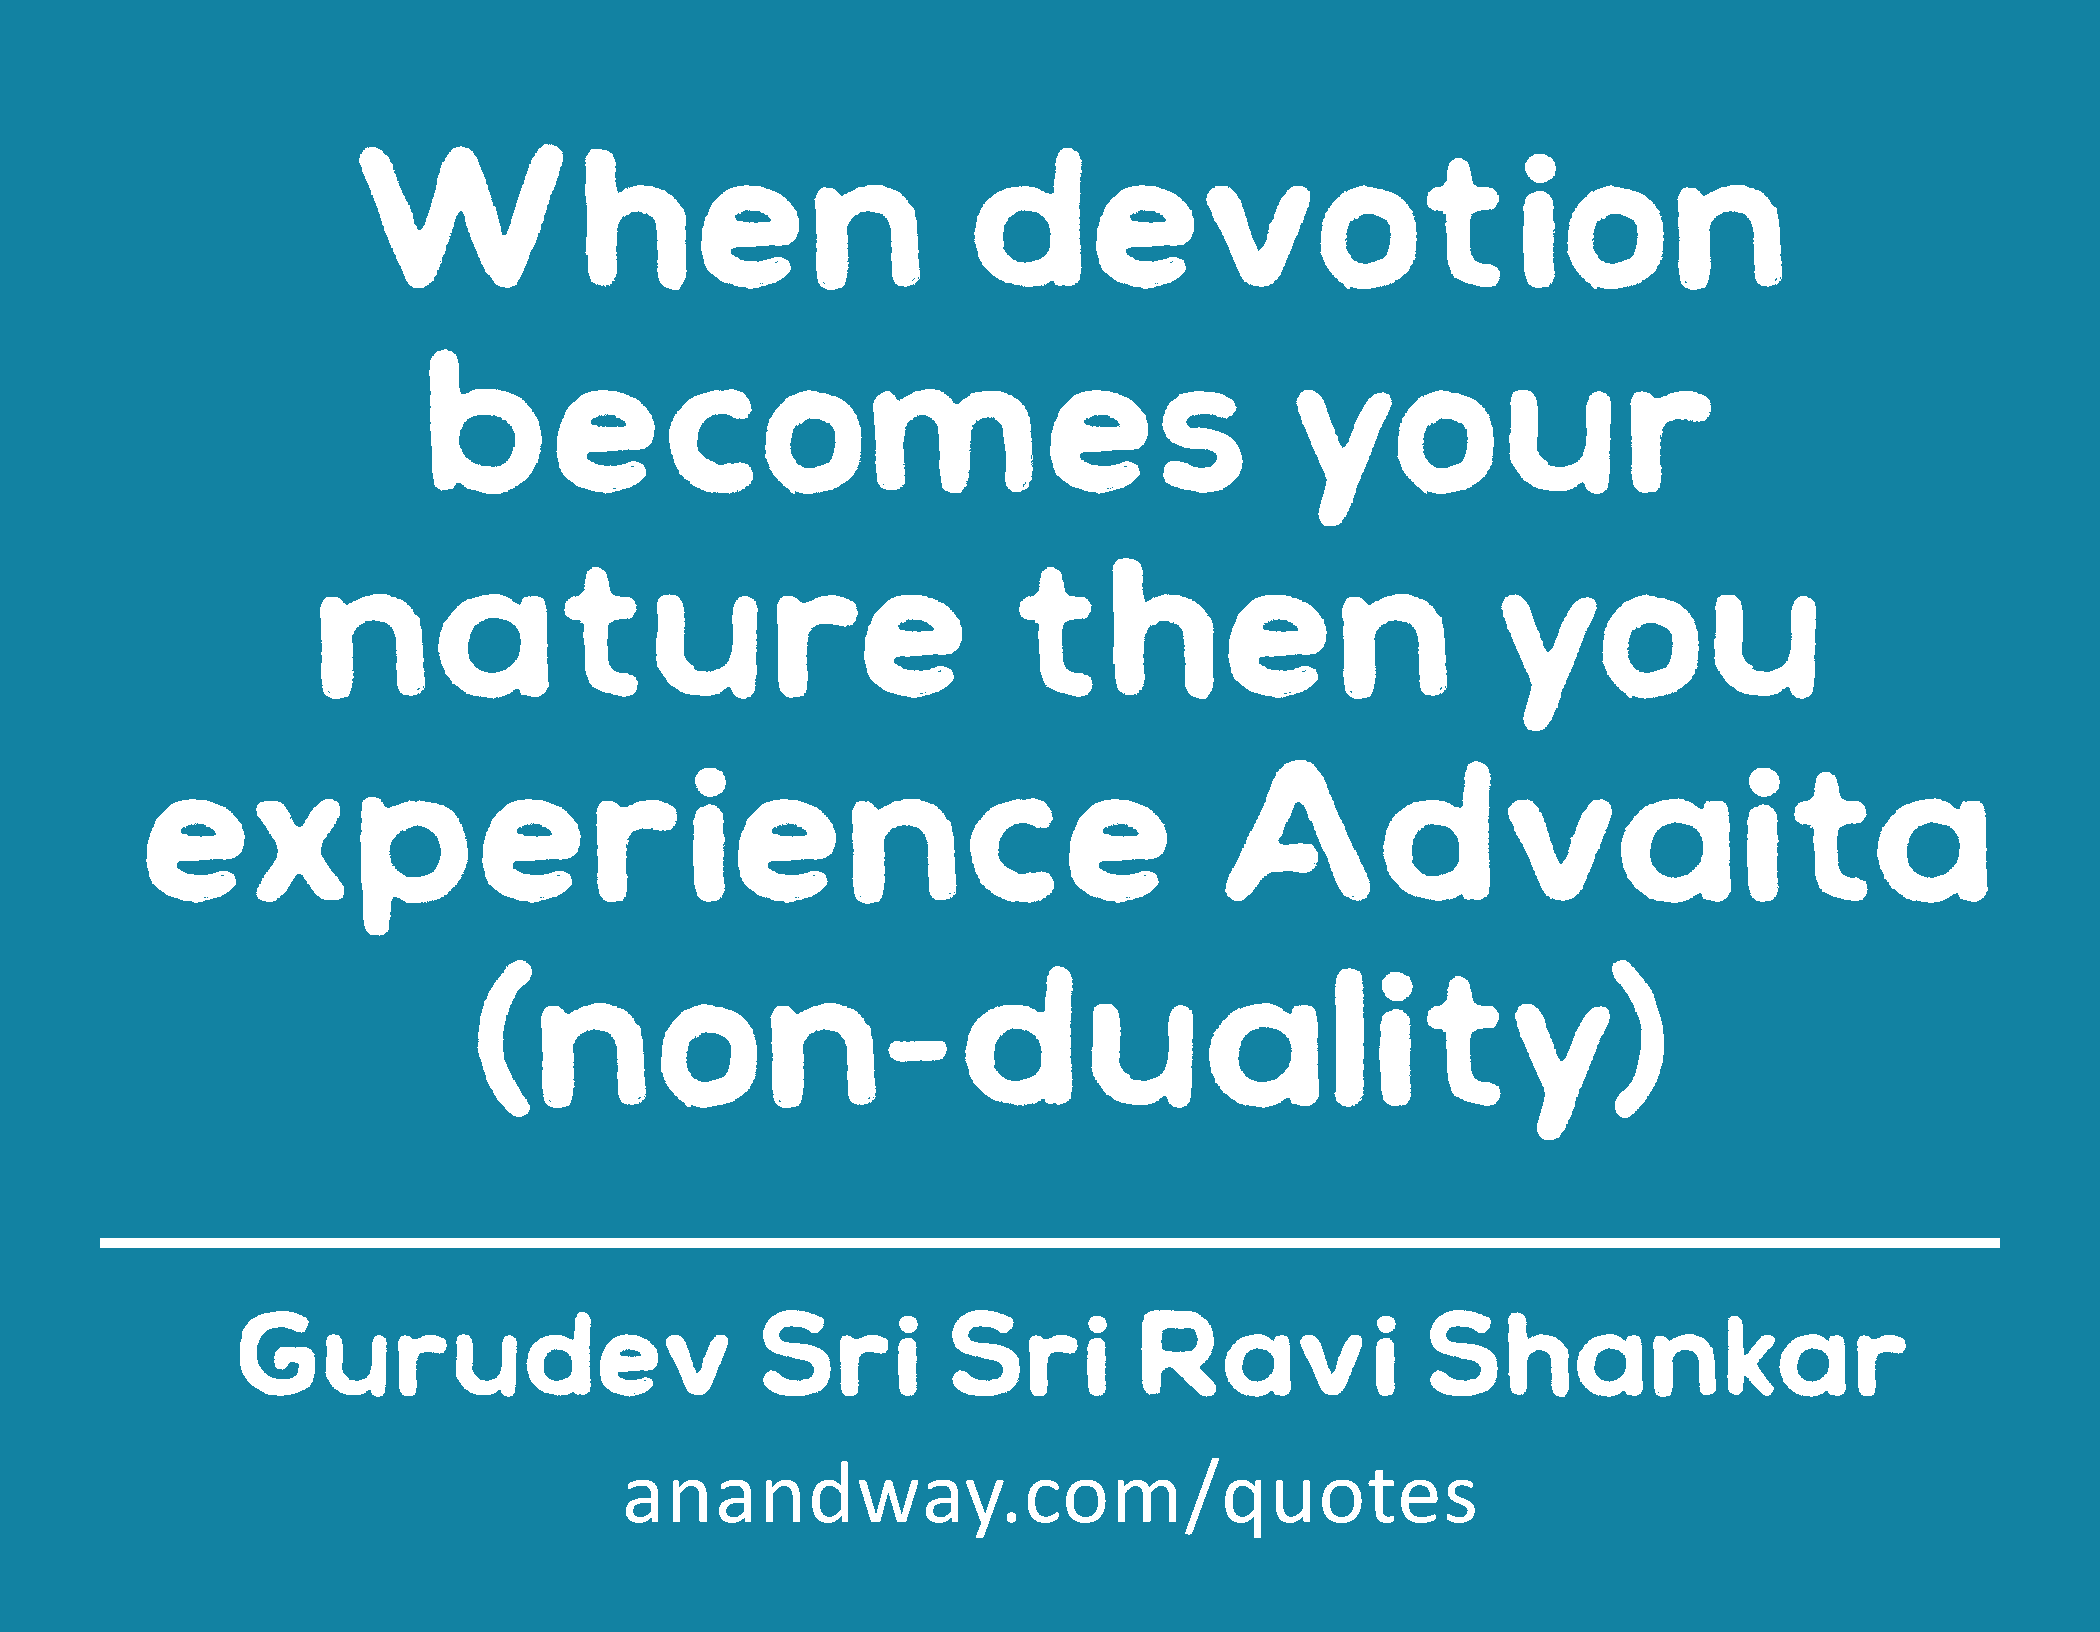 When devotion becomes your nature then you experience Advaita (non-duality) 
 -Gurudev Sri Sri Ravi Shankar